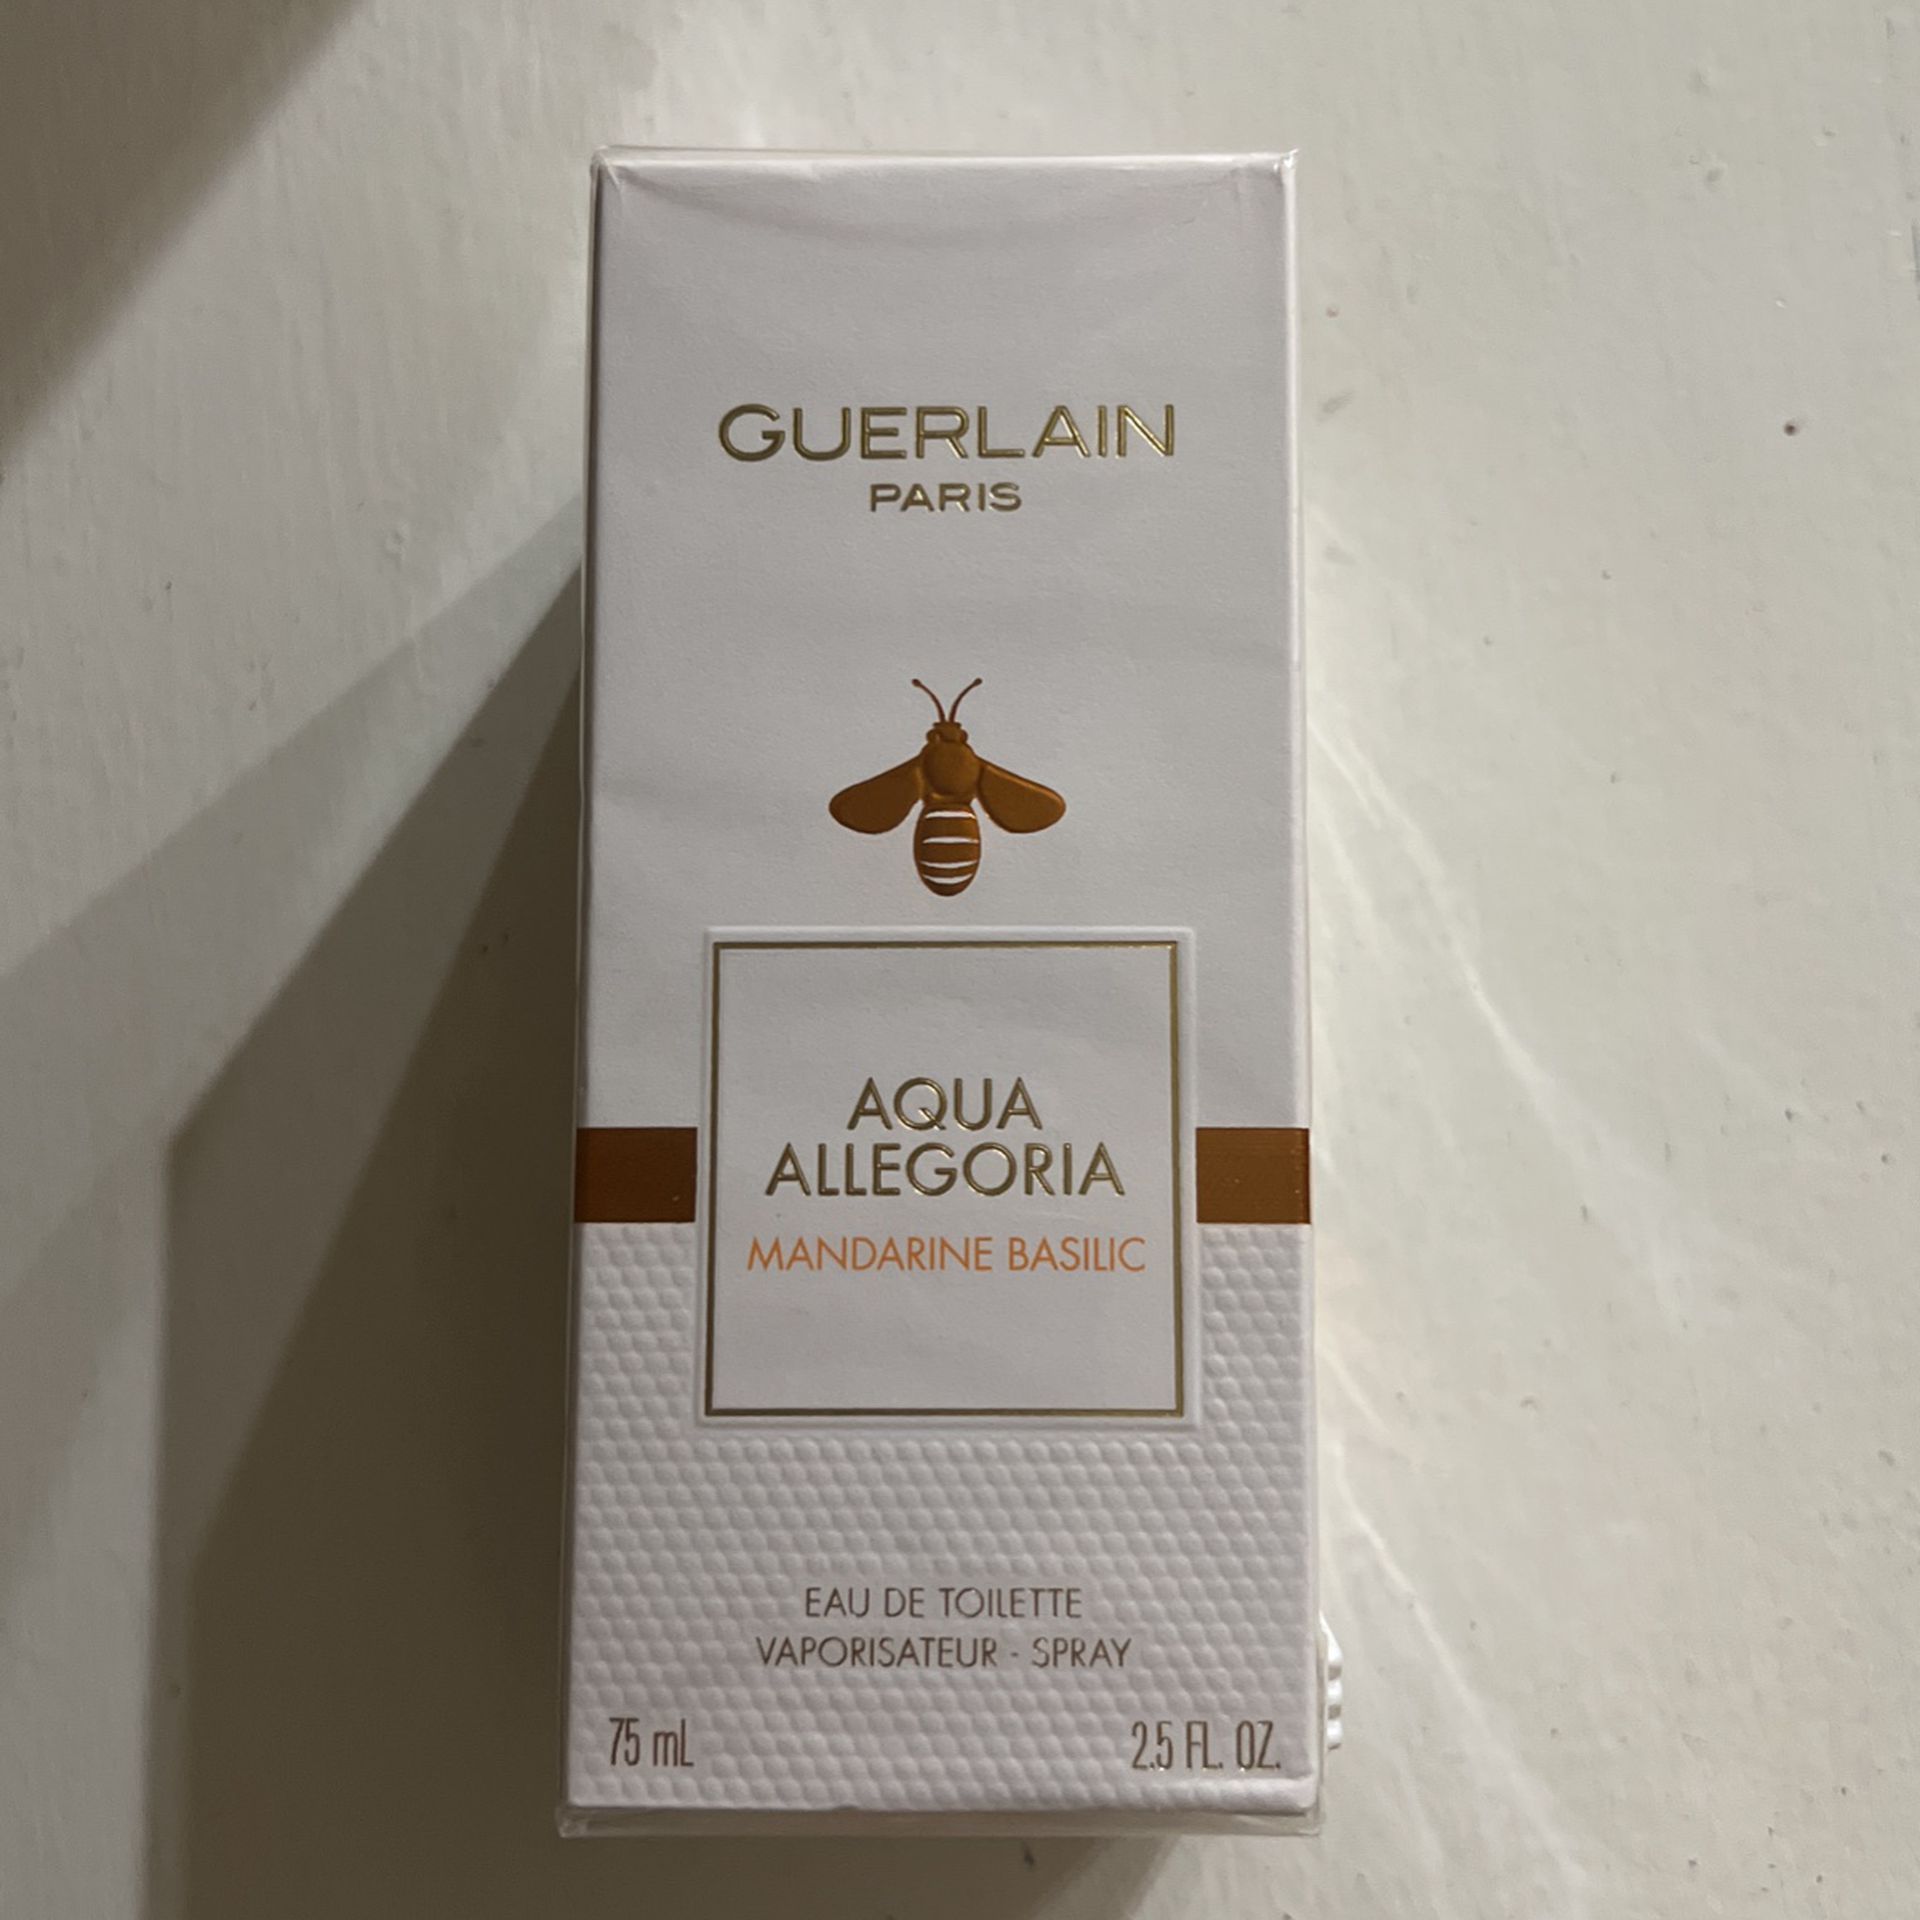 Guerlain Mandarins Basilic Fragrance 